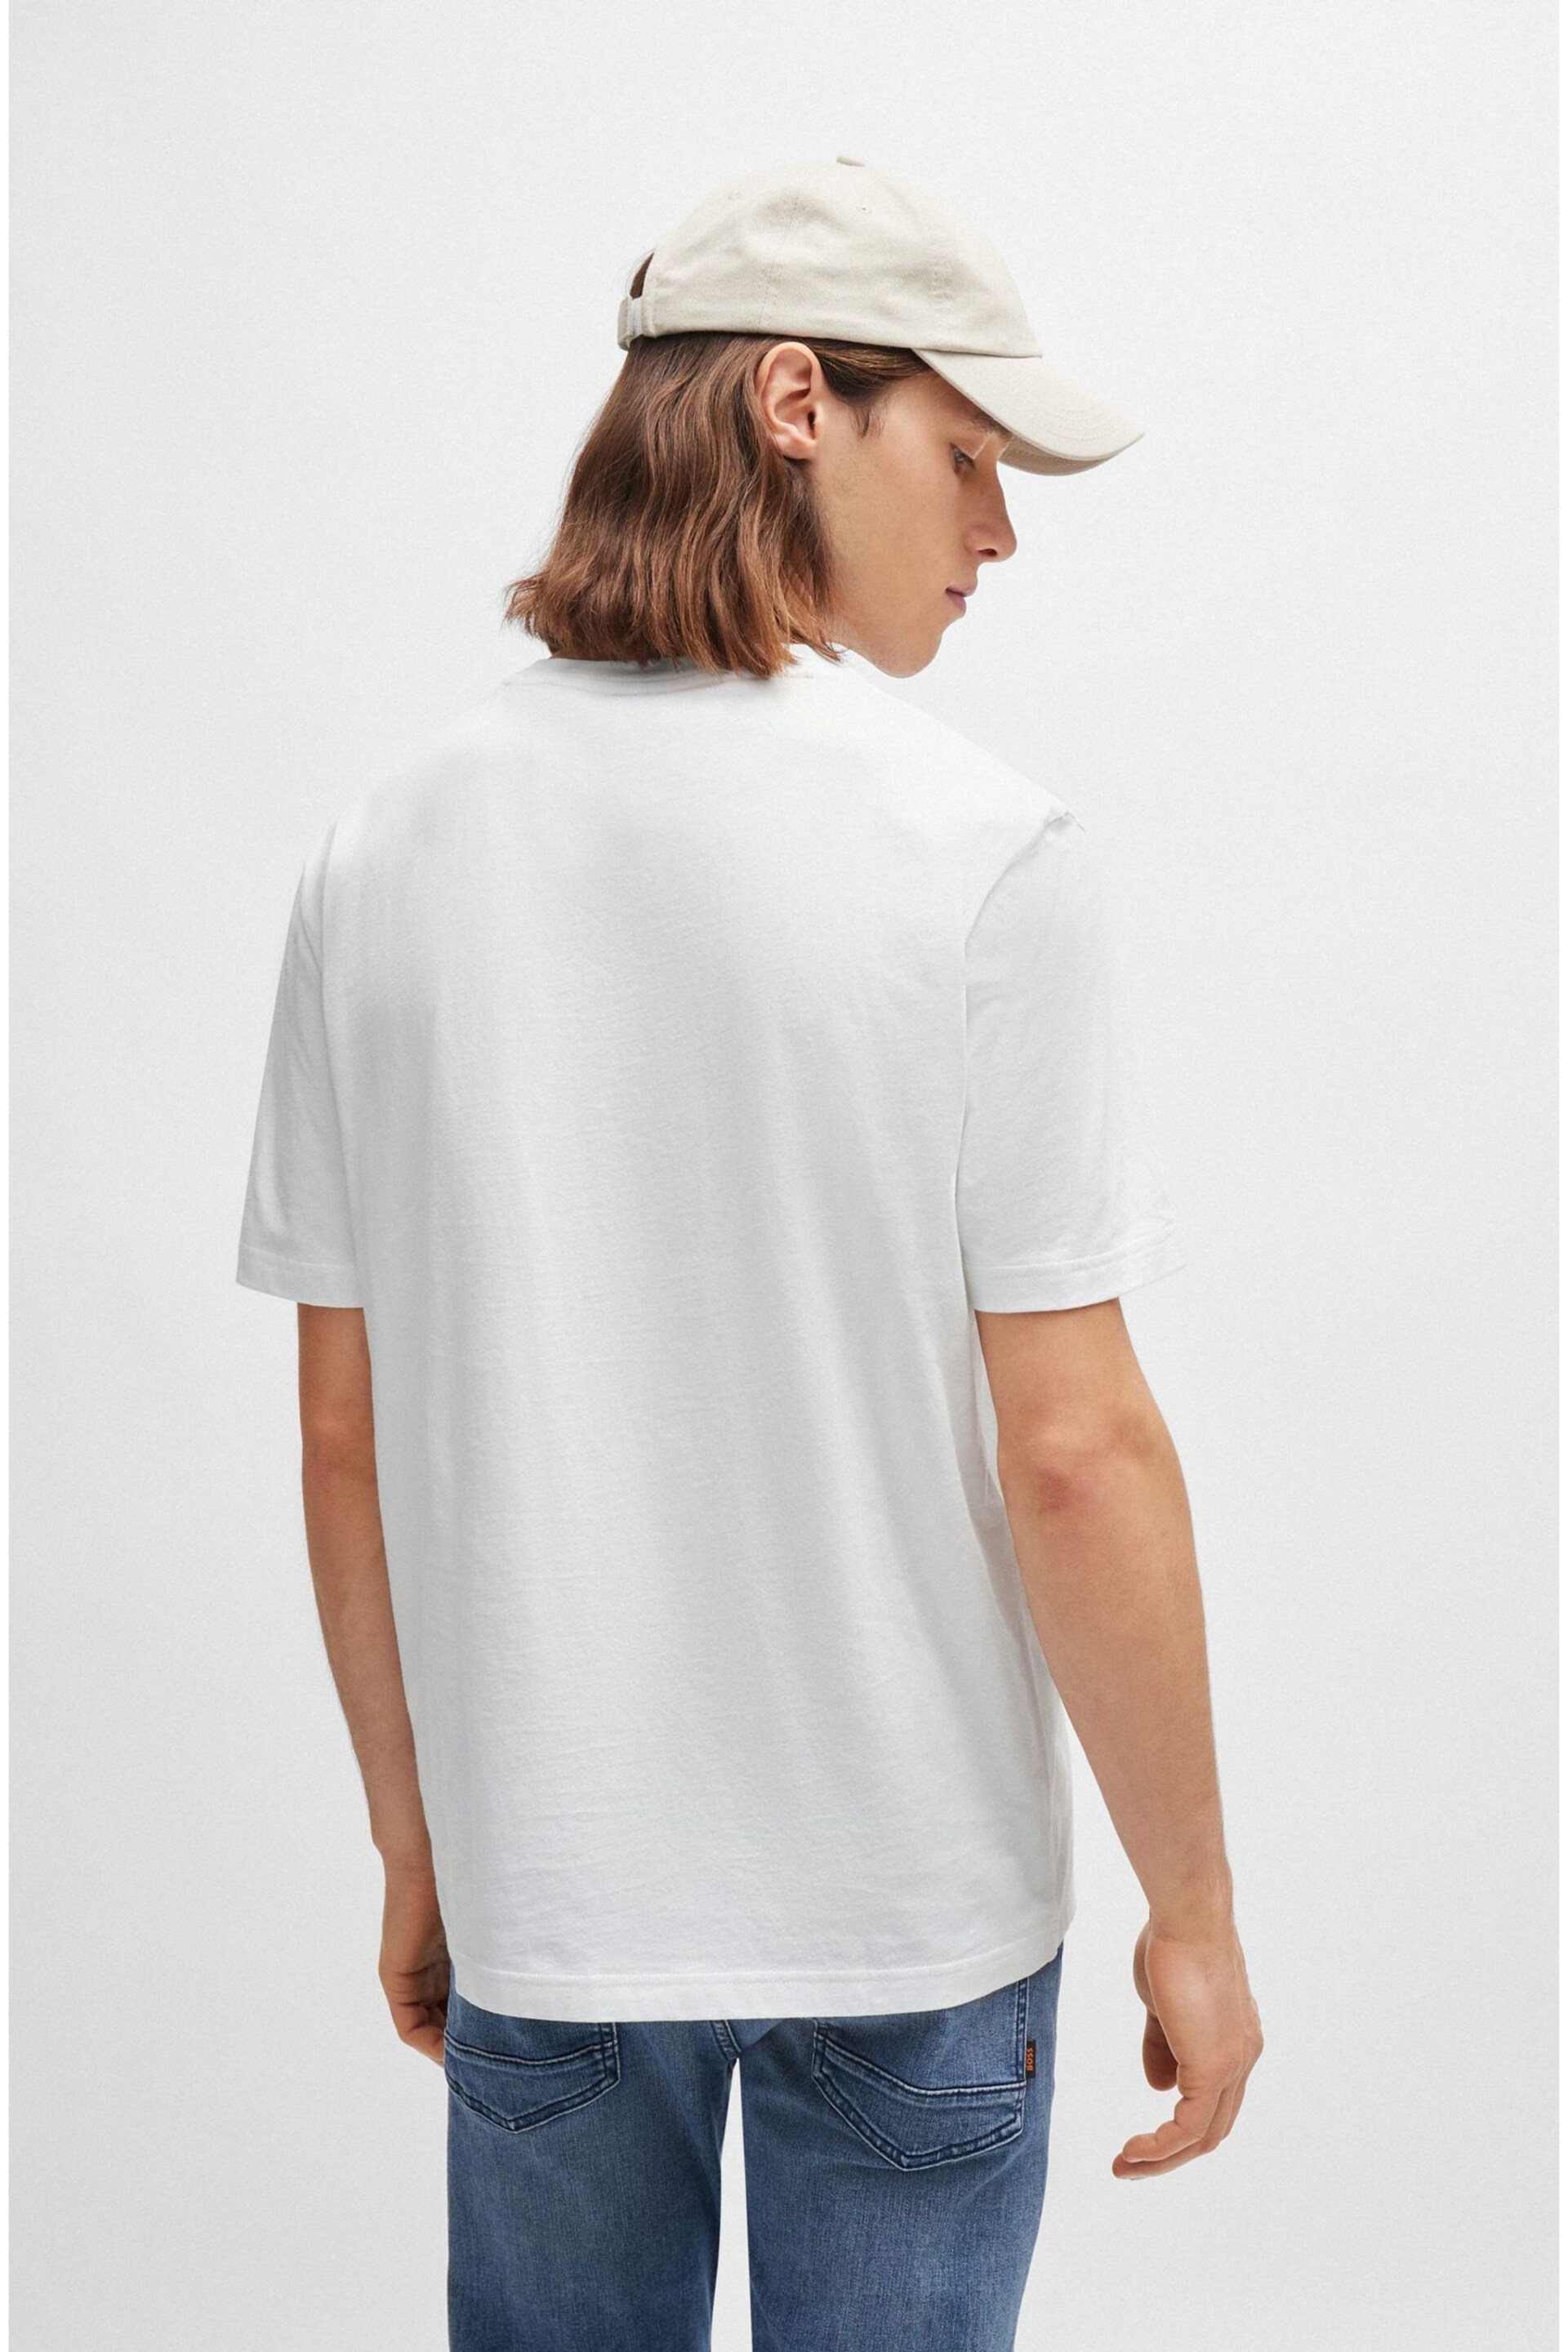 BOSS White Cotton-Jersey Regular-Fit T-Shirt With Seasonal Print - Image 2 of 5